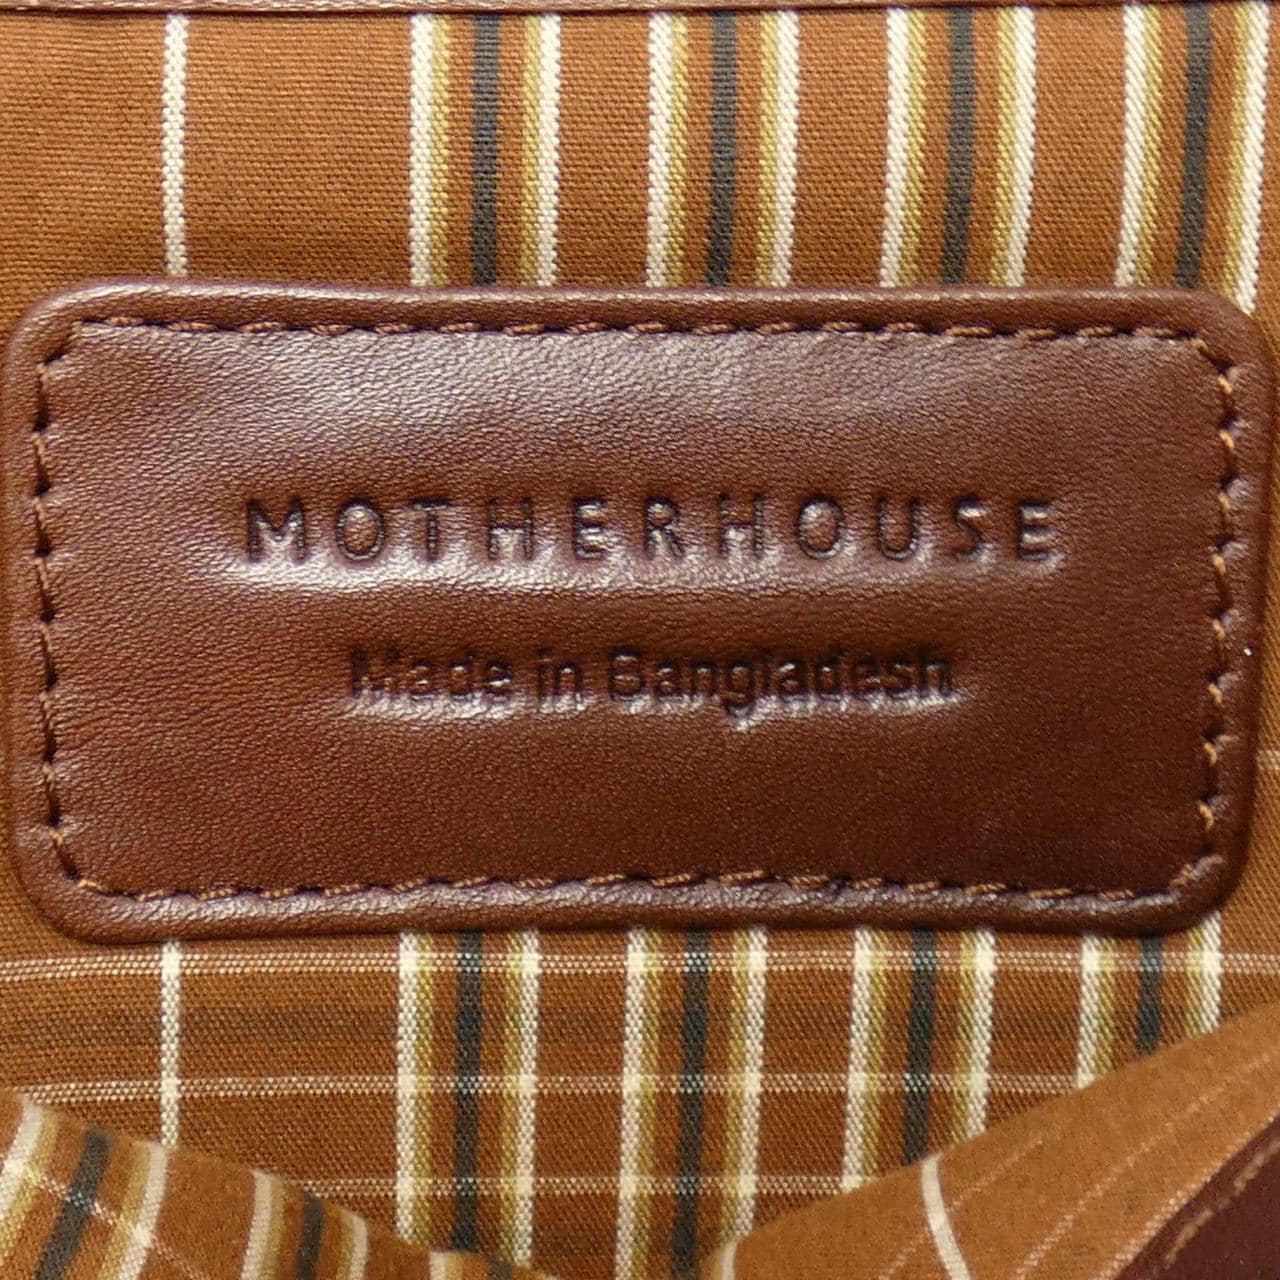 MOTHERHOUSE BAG